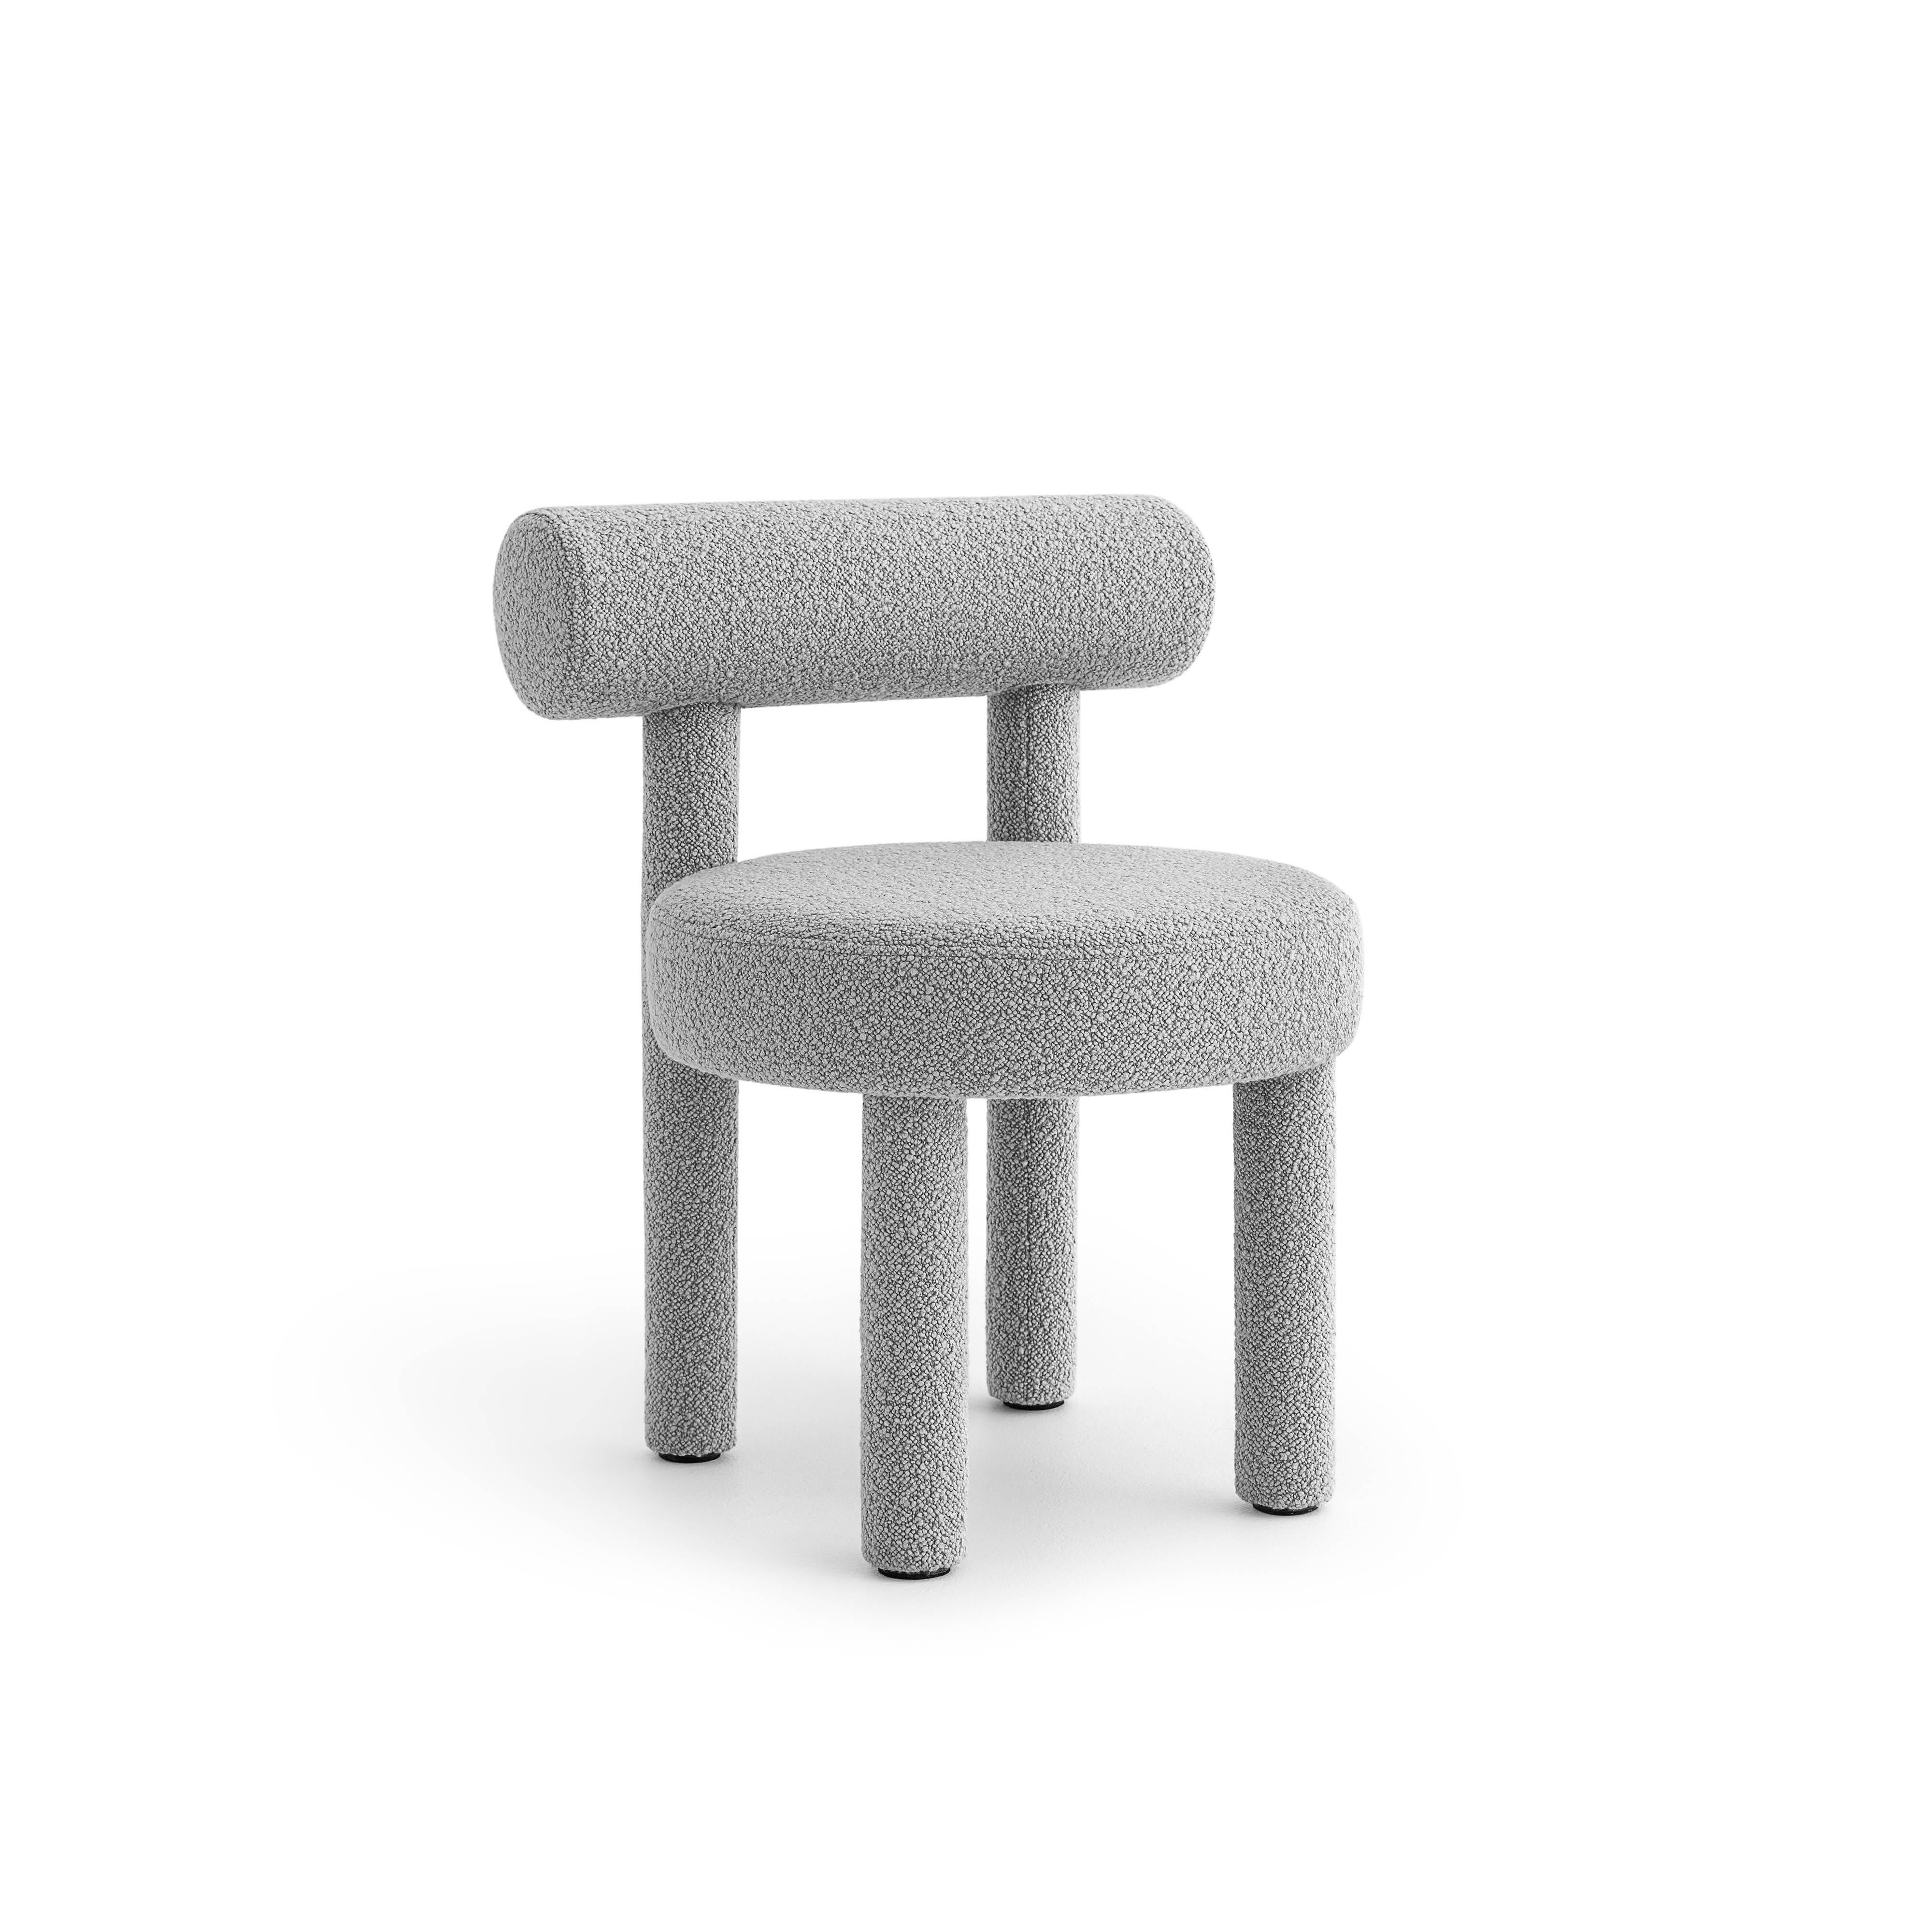 Organic Modern Contemporary Chair 'Gropius CS1' by Noom, Dedar, Karakorum 004 For Sale